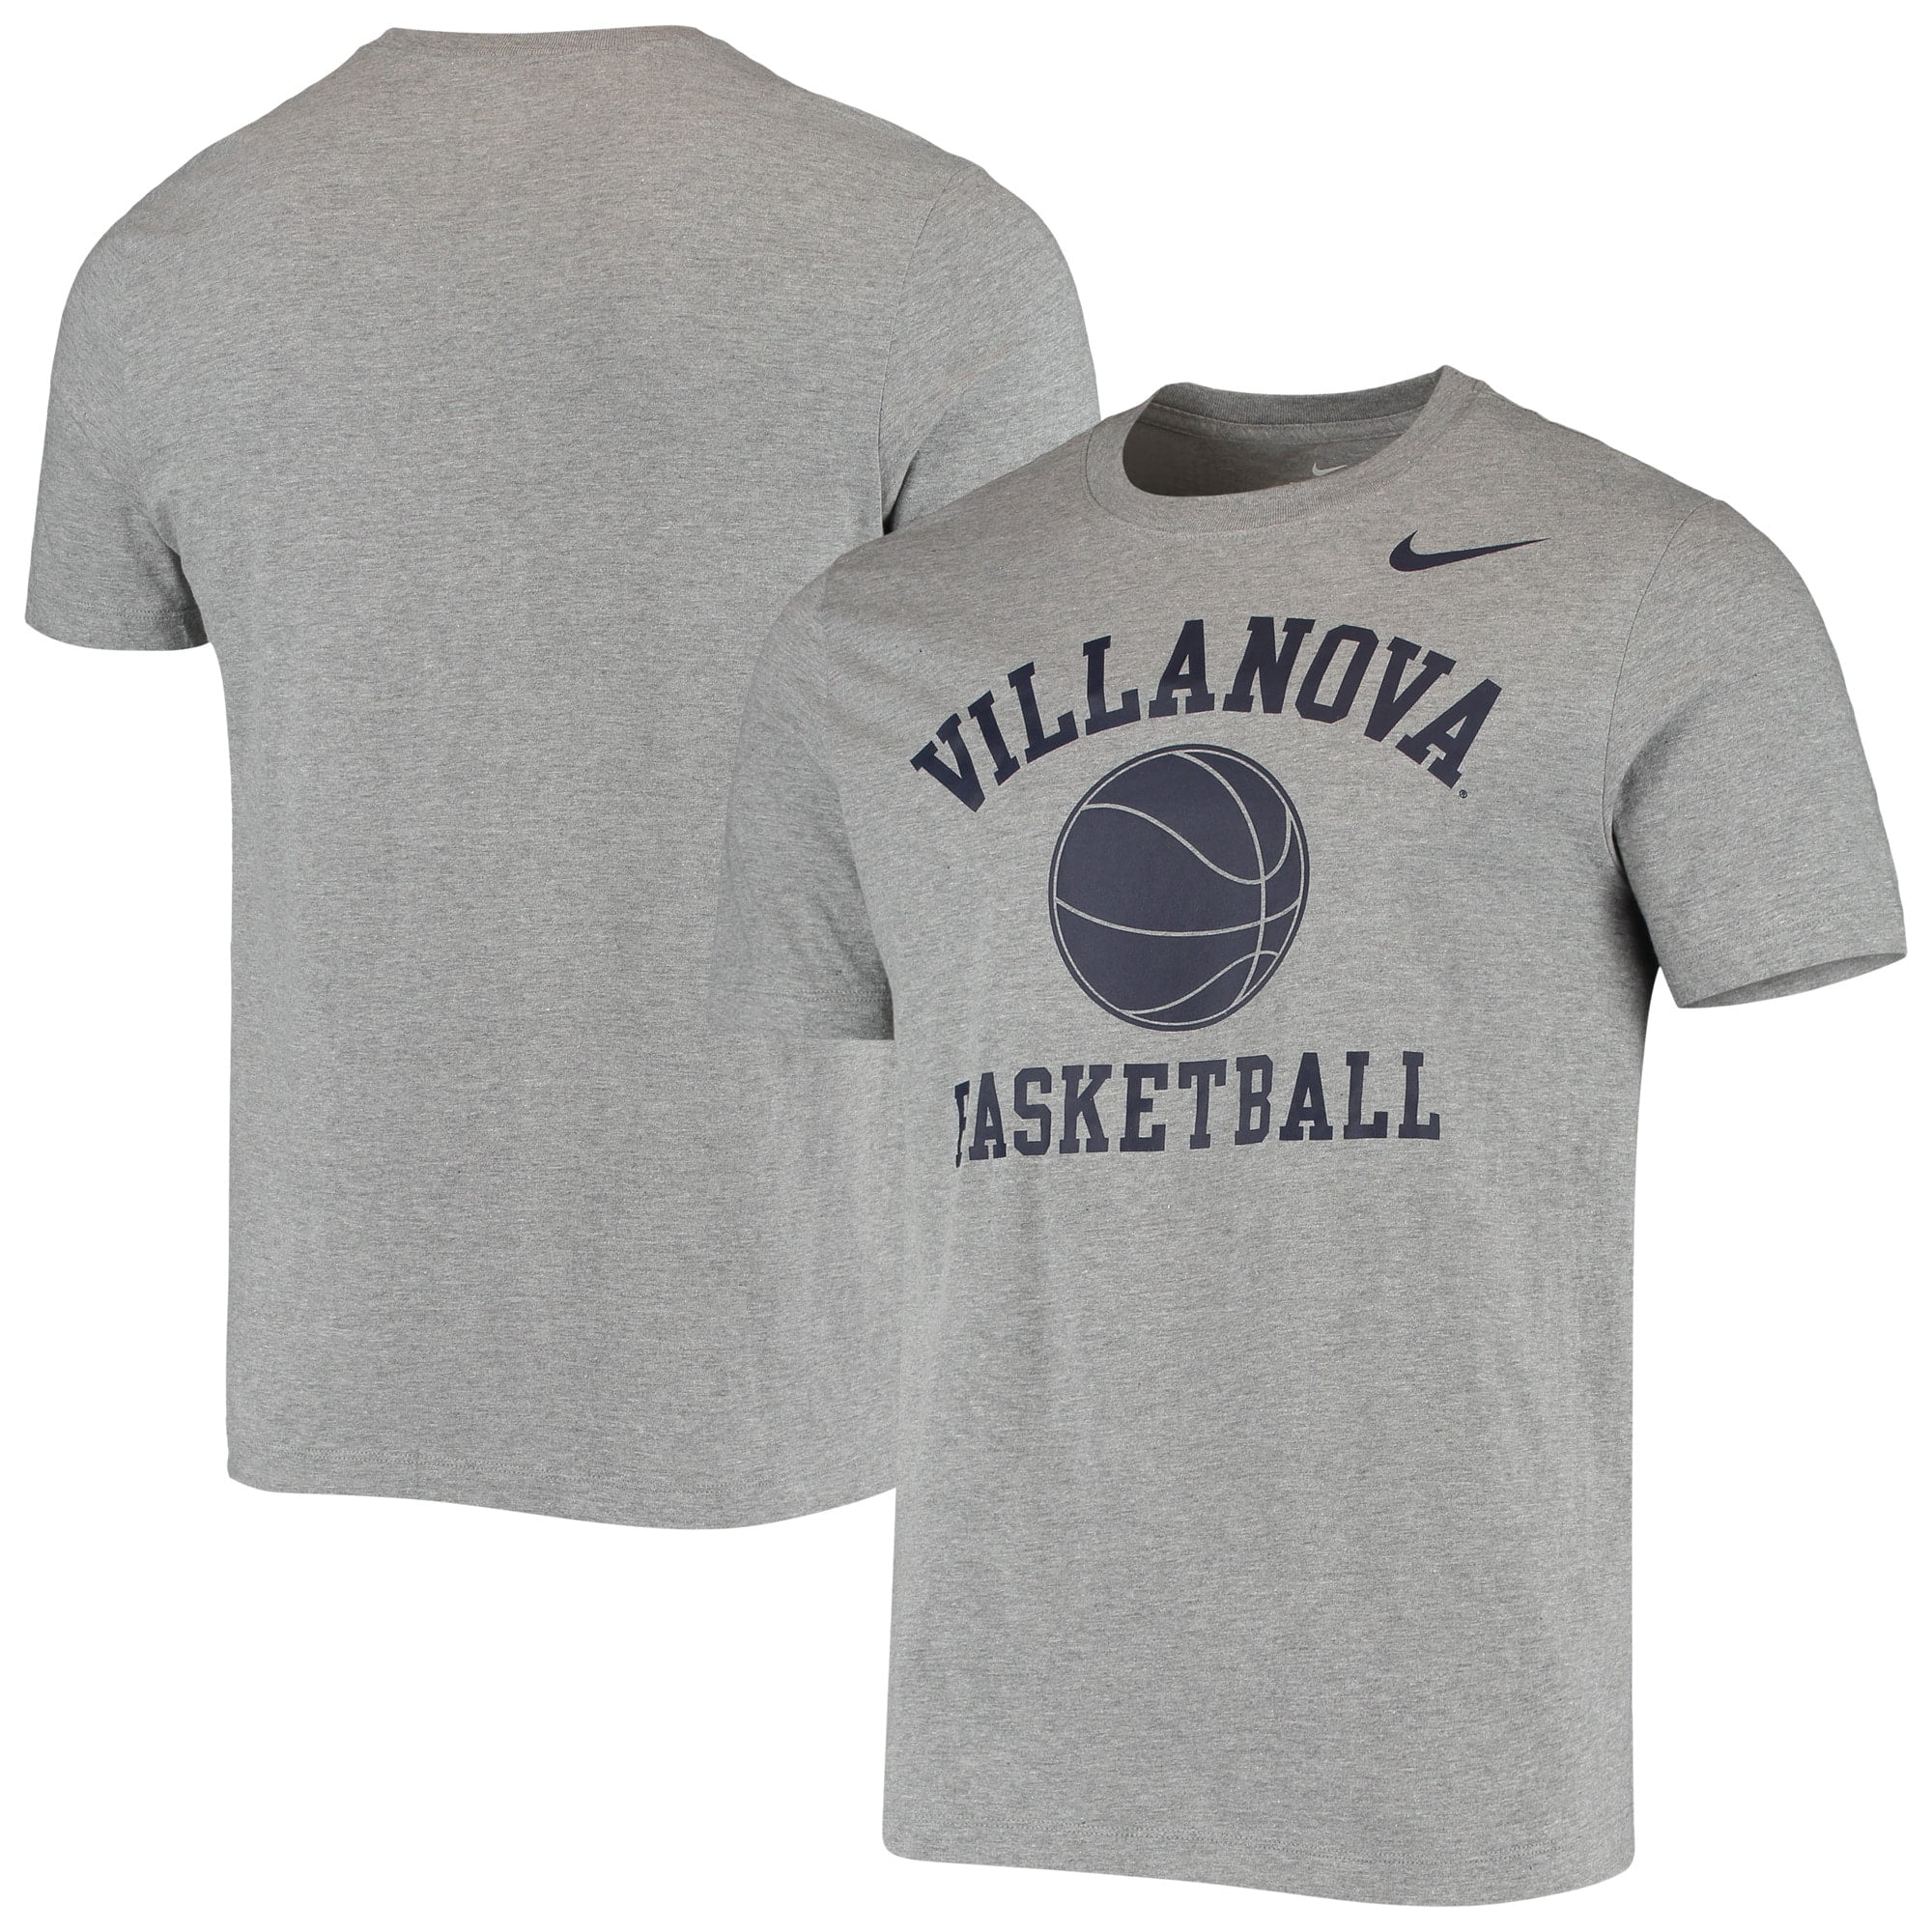 Men's Nike Heathered Gray Villanova Wildcats Basketball Phys Ed T-Shirt